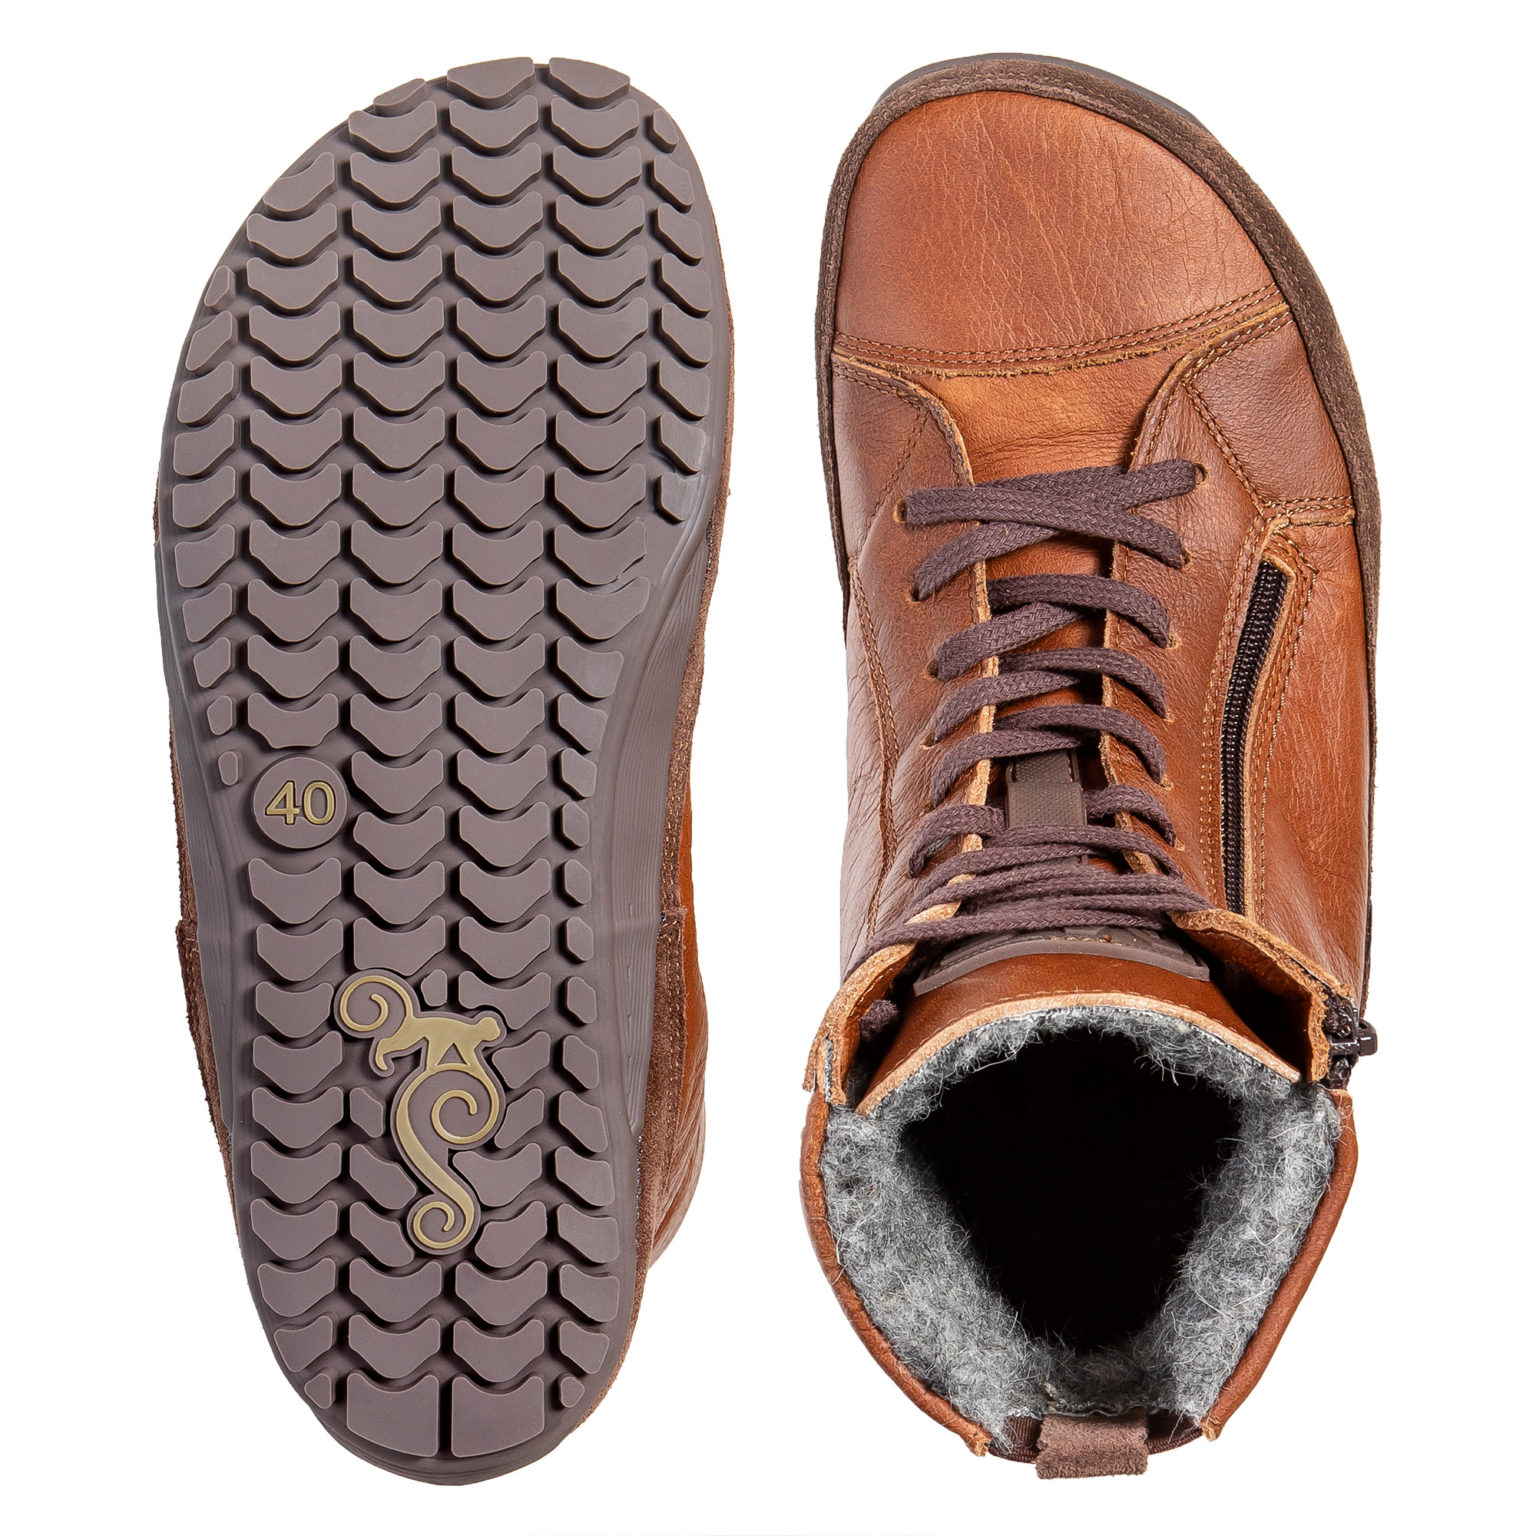 Comfortable barefoot winter boots - Magical Shoes Alaskan Buffalo Chestnut